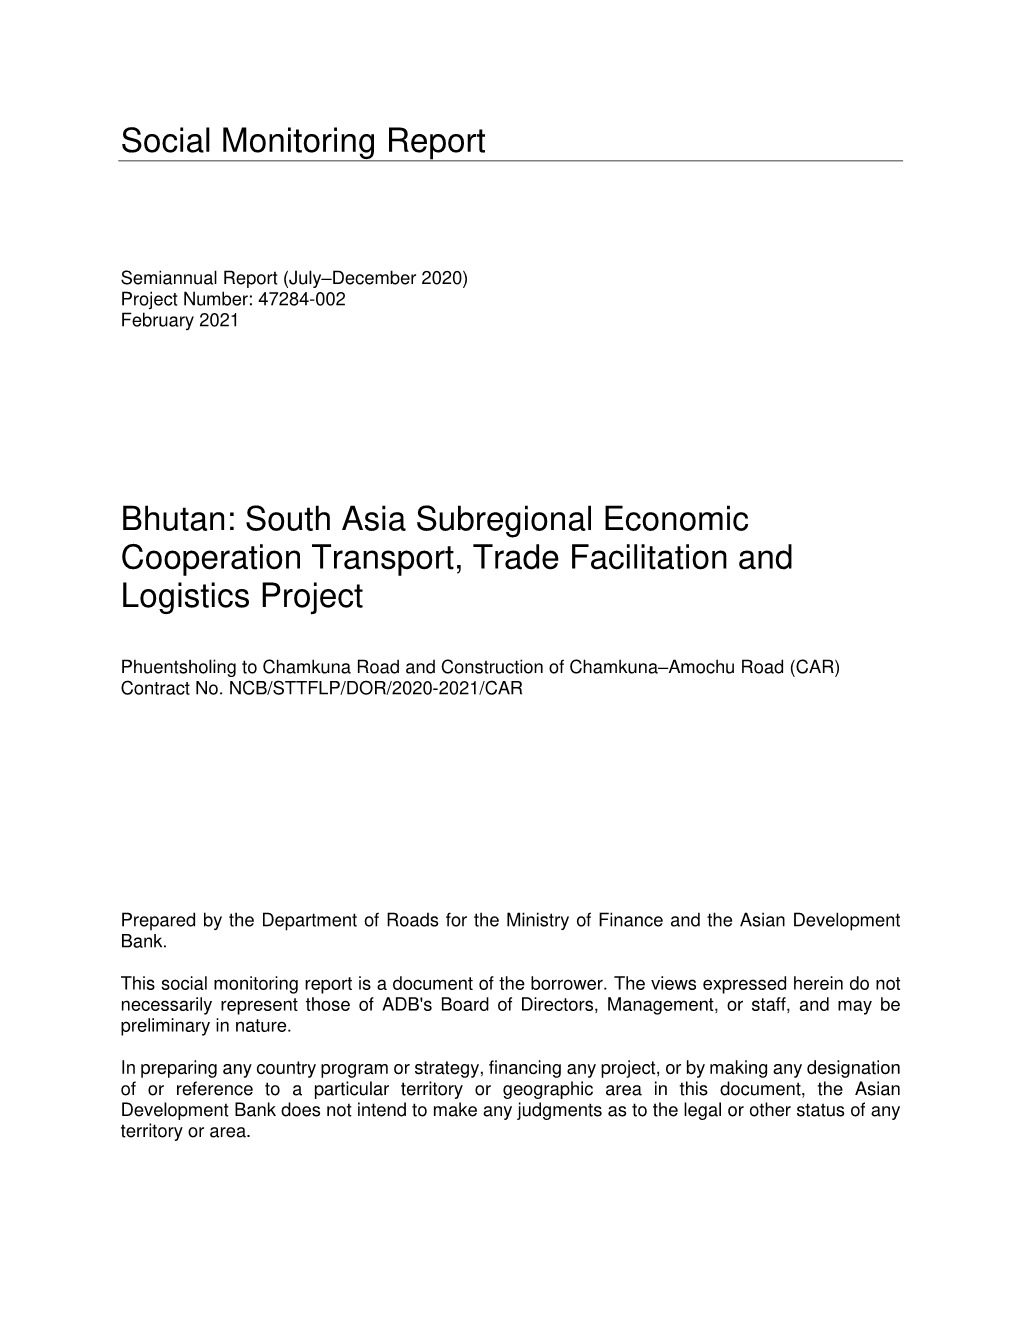 Social Monitoring Report Bhutan: South Asia Subregional Economic Cooperation Transport, Trade Facilitation and Logistics Project